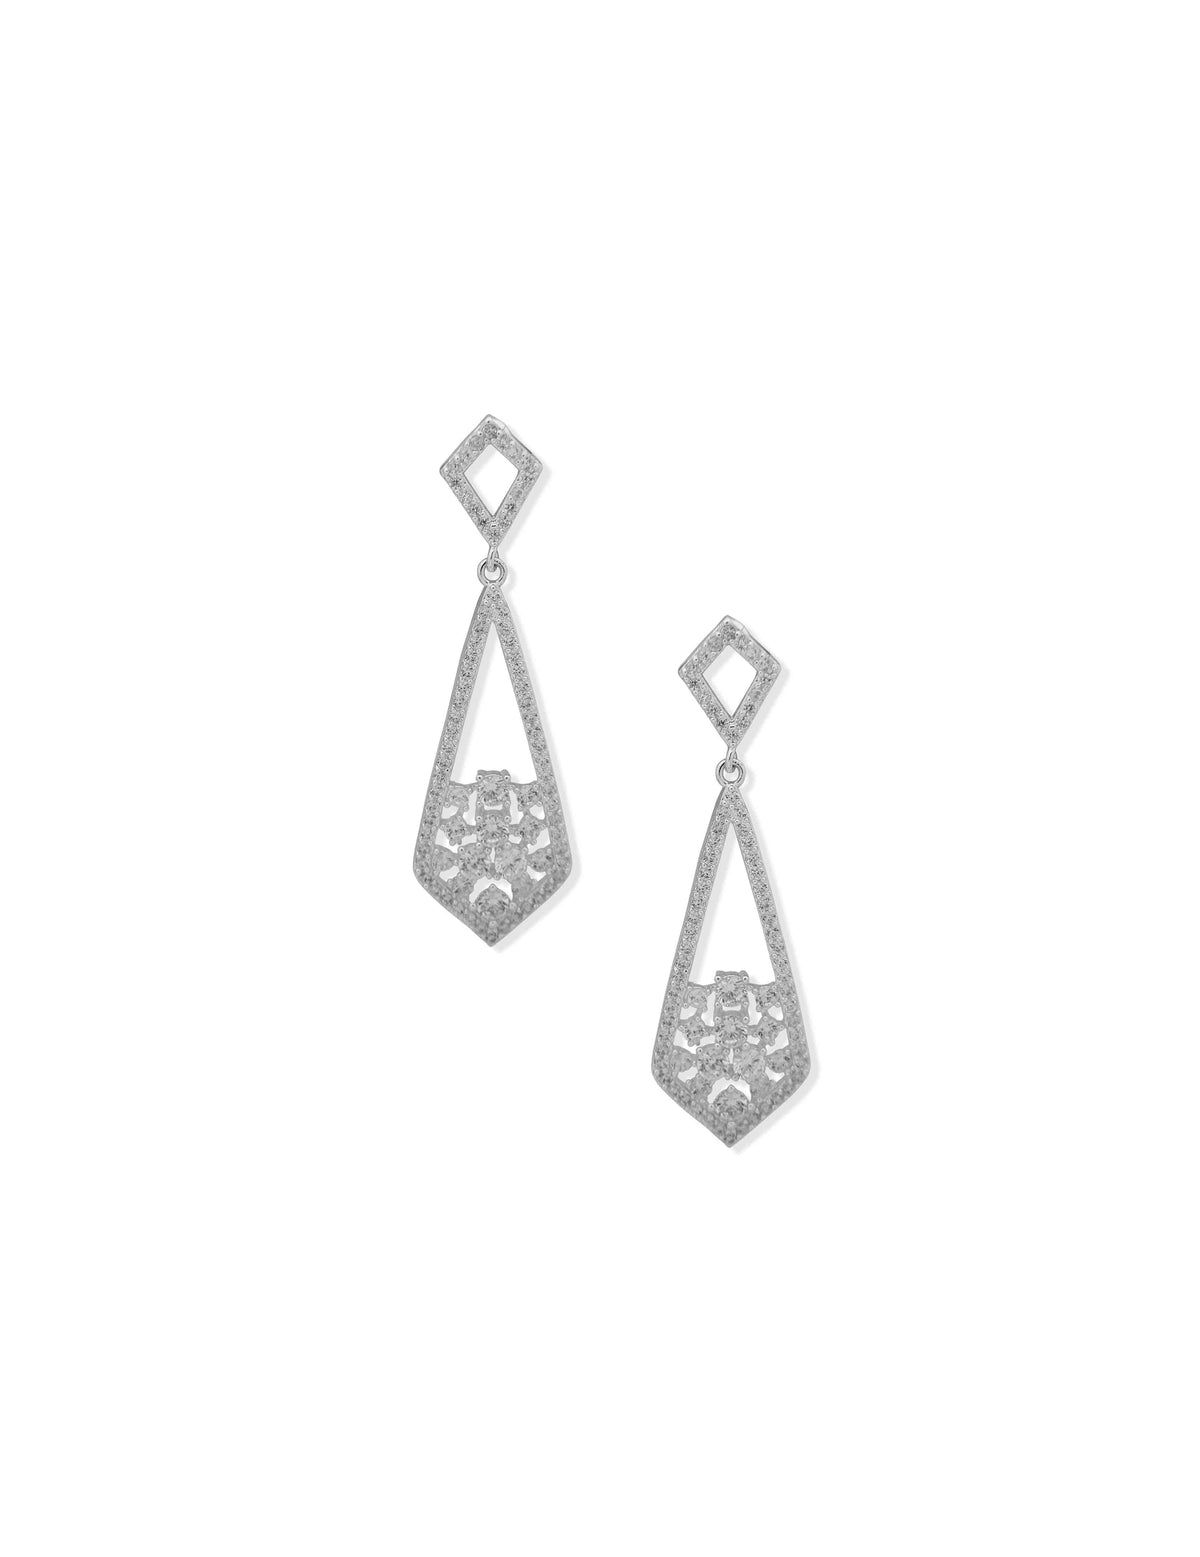 Anne Klein Silver Tone Crystal Openwork Drop Earrings